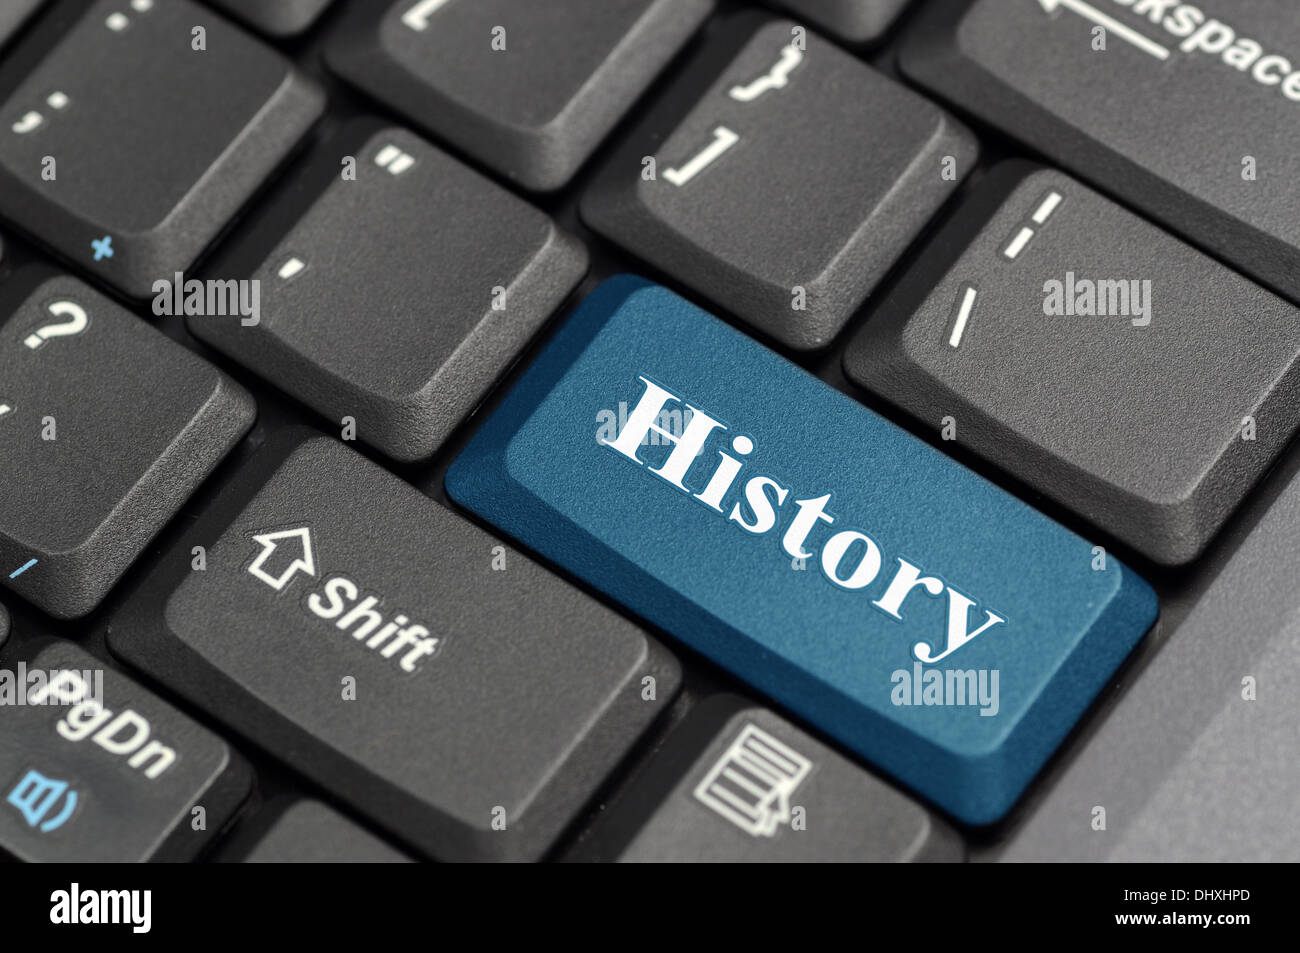 History key on computer keyboard Stock Photo